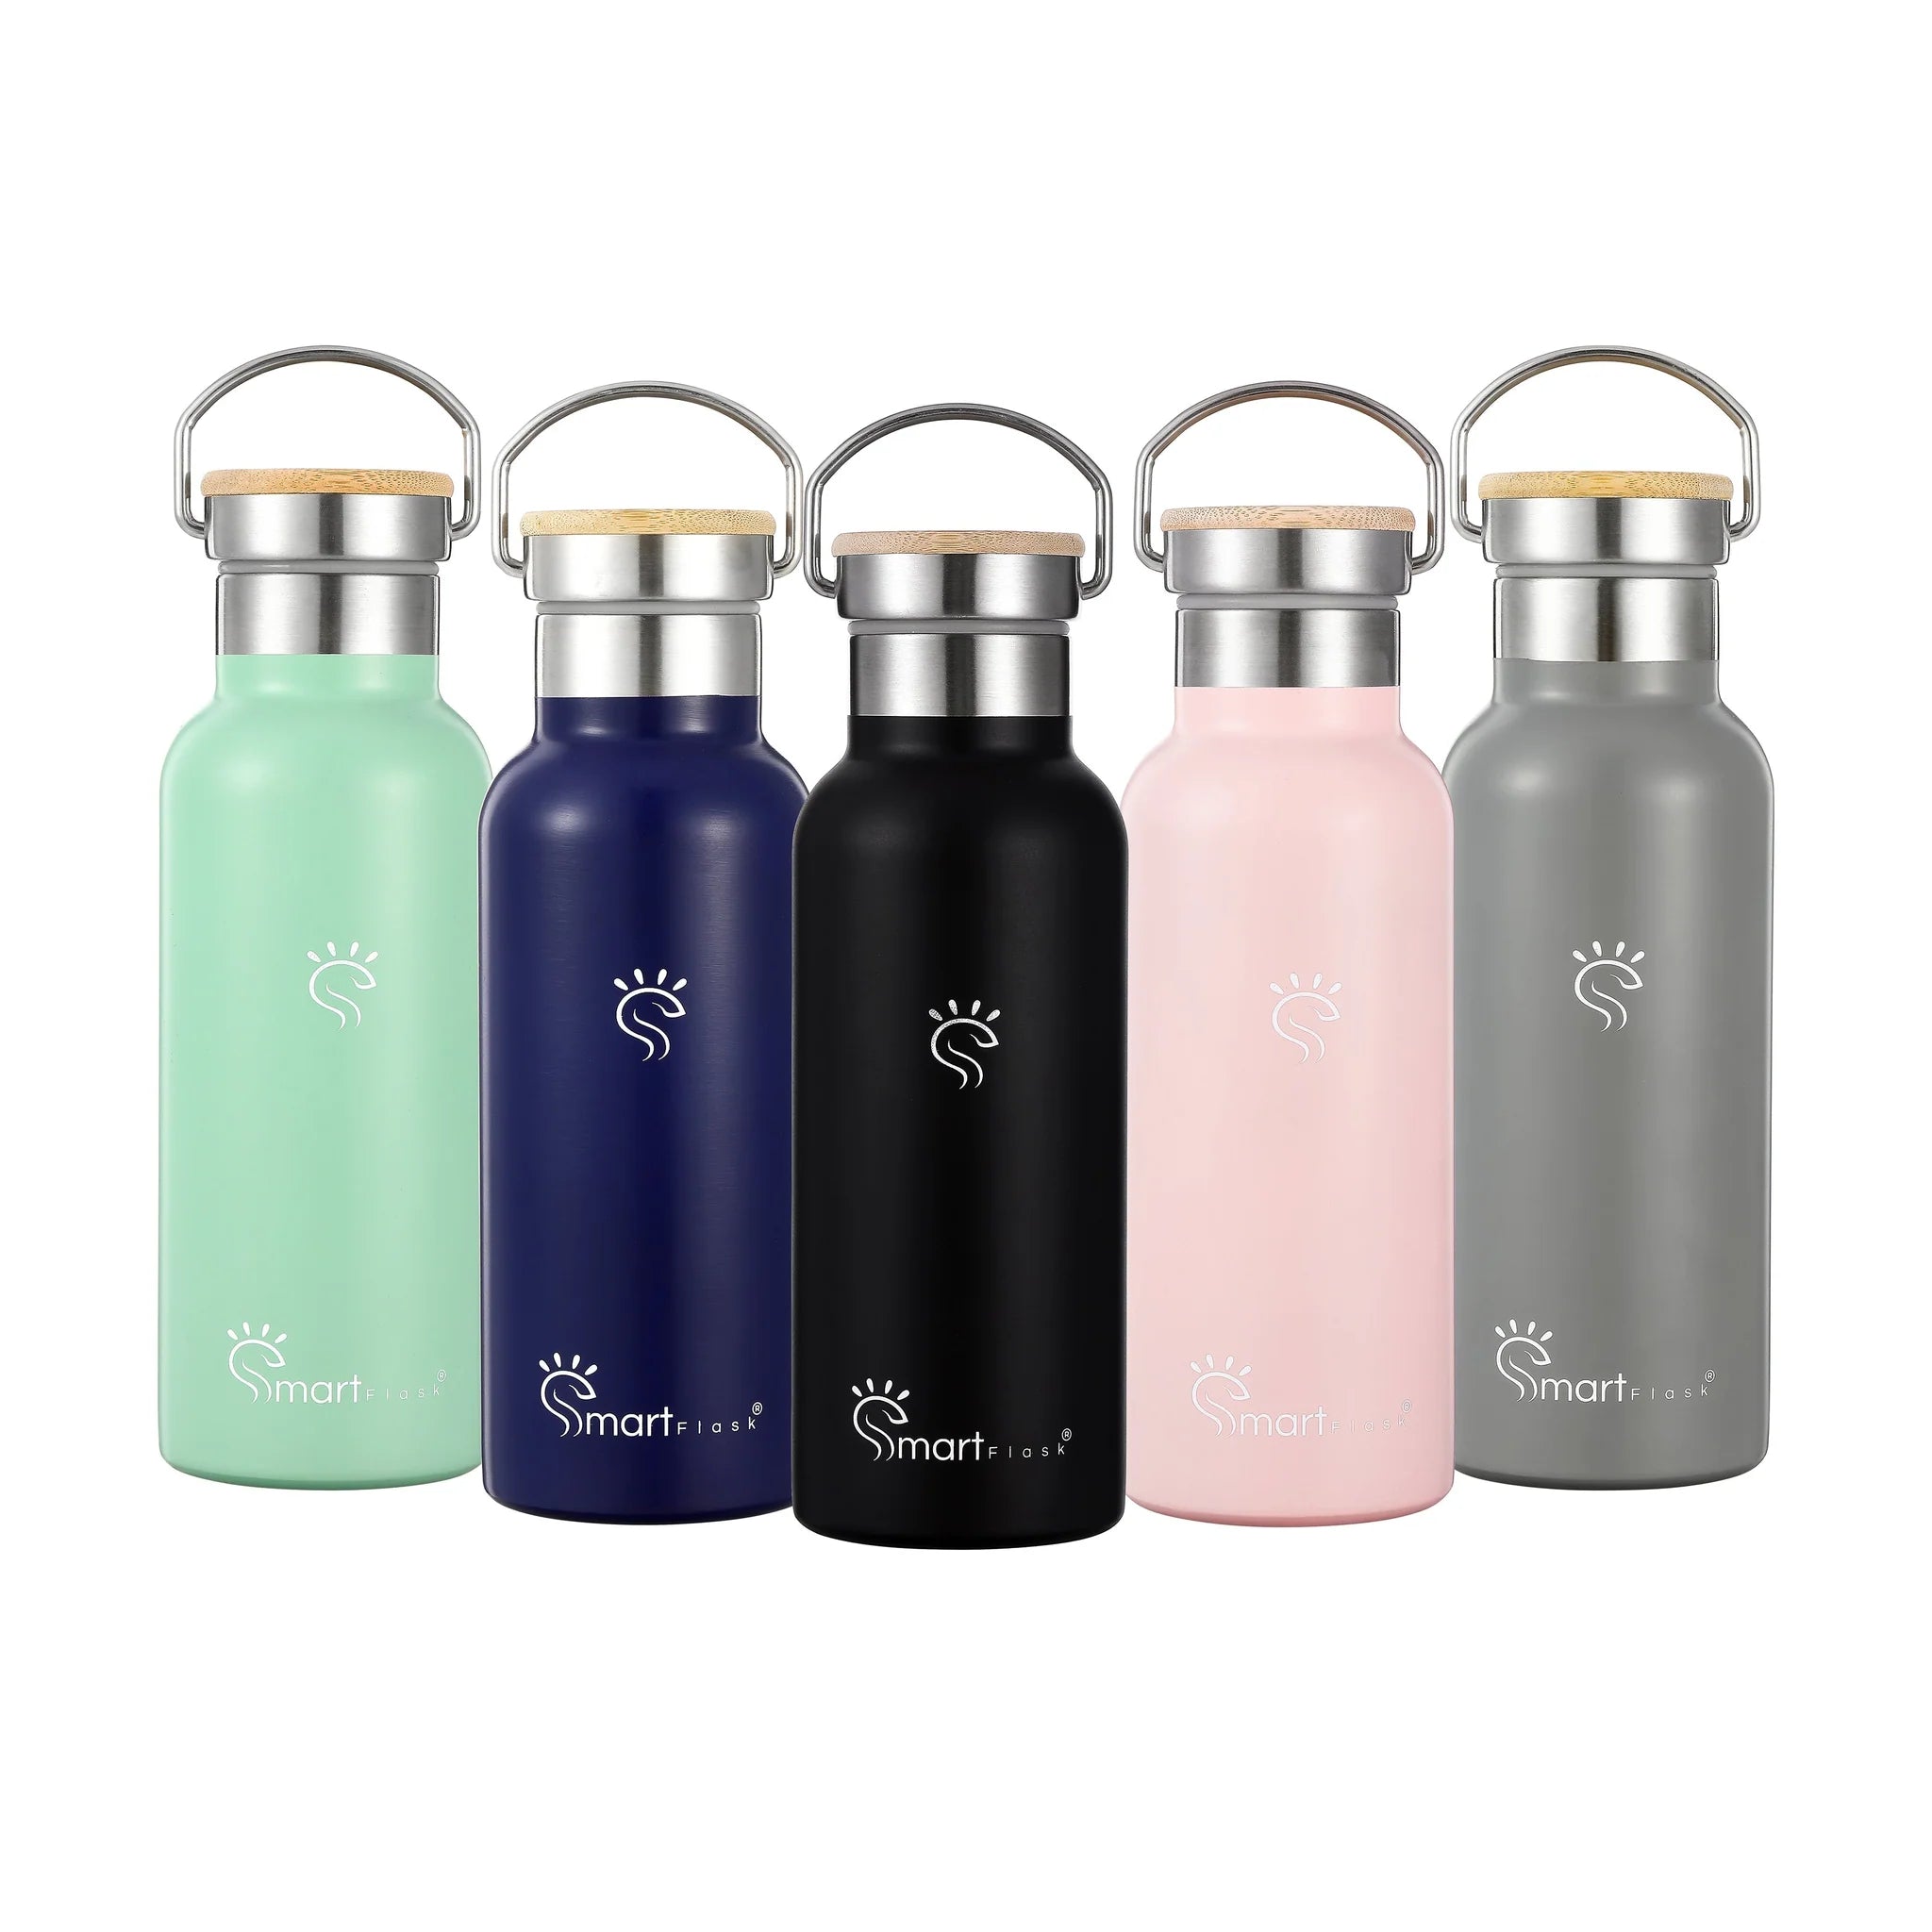 Celeste Green Smart Hydration Flask